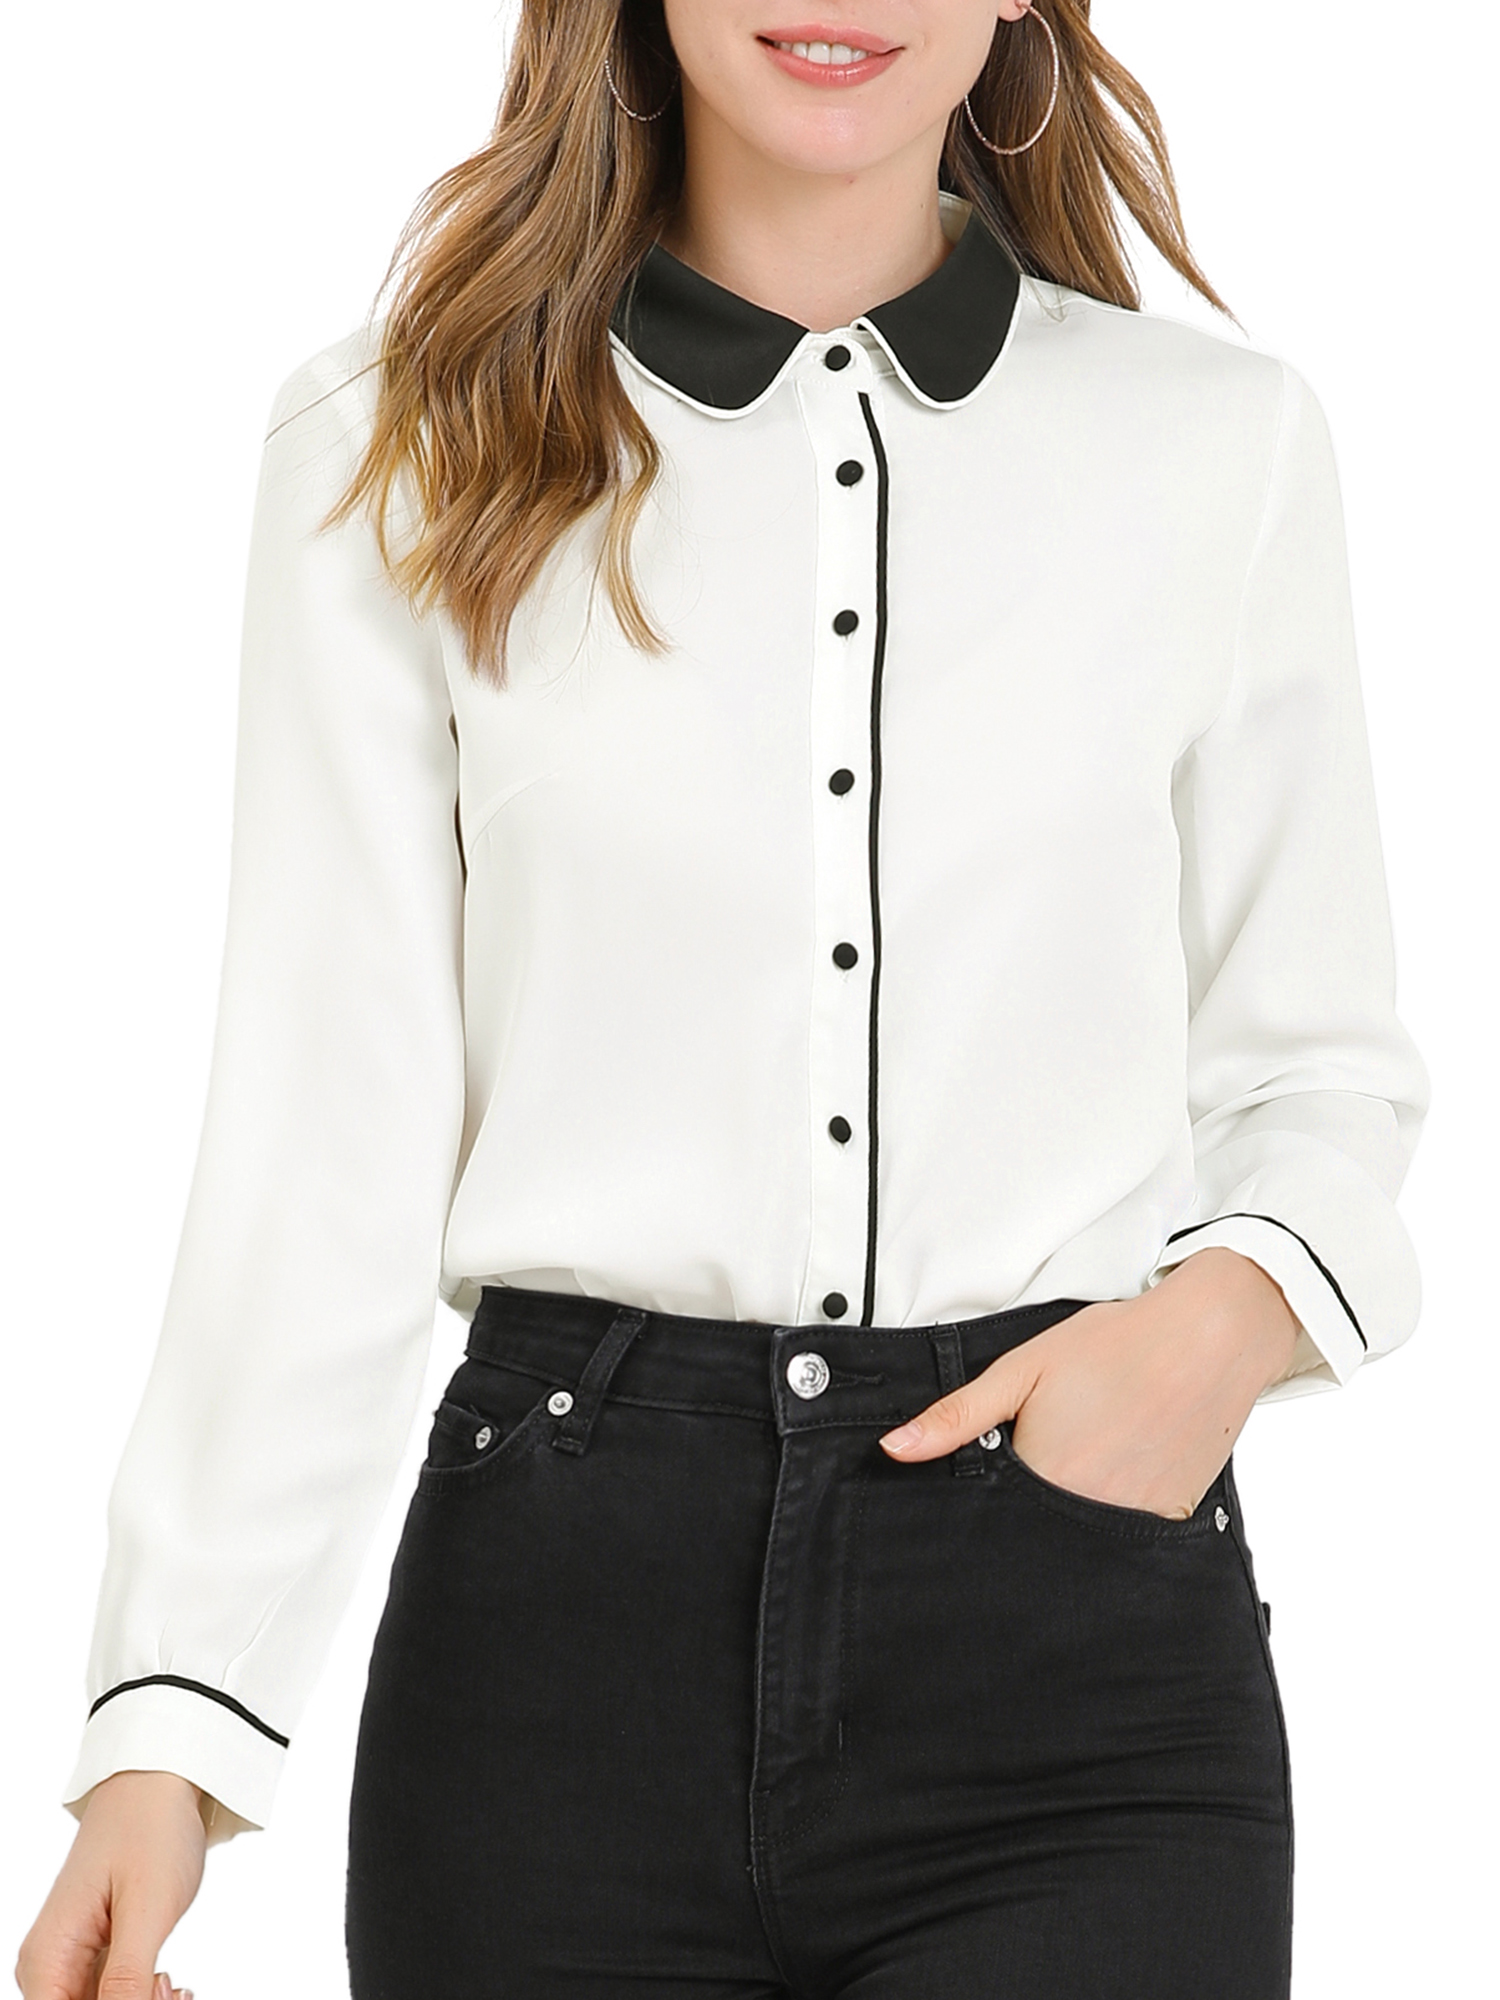 MODA NOVA Junior's Button Up Shirt Long Sleeve Buttons Cuff Top Blouse White XXL - image 5 of 5